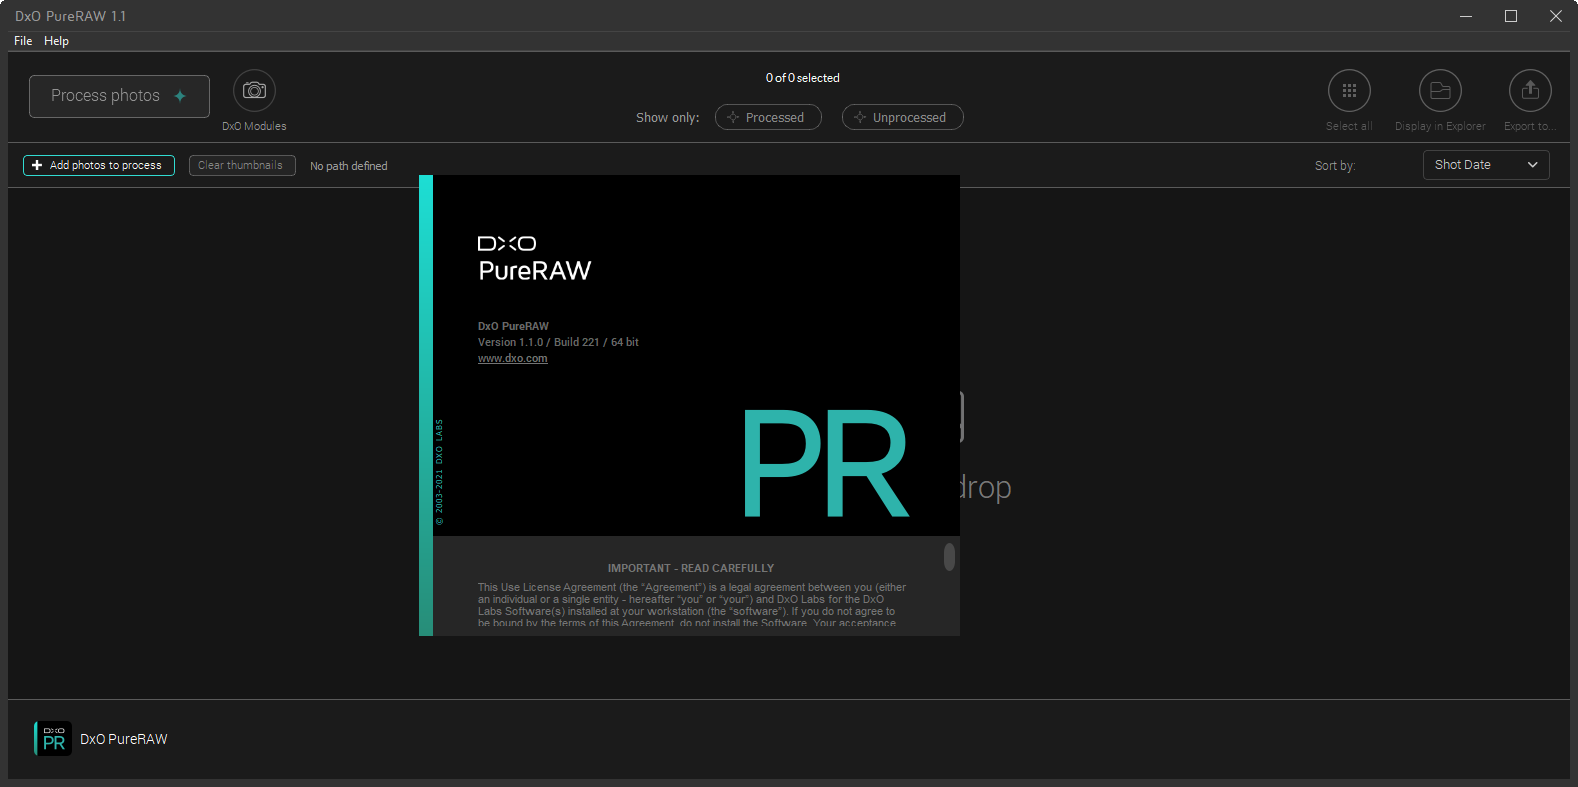 DxO PureRAW 3.3.1.14 download the last version for windows